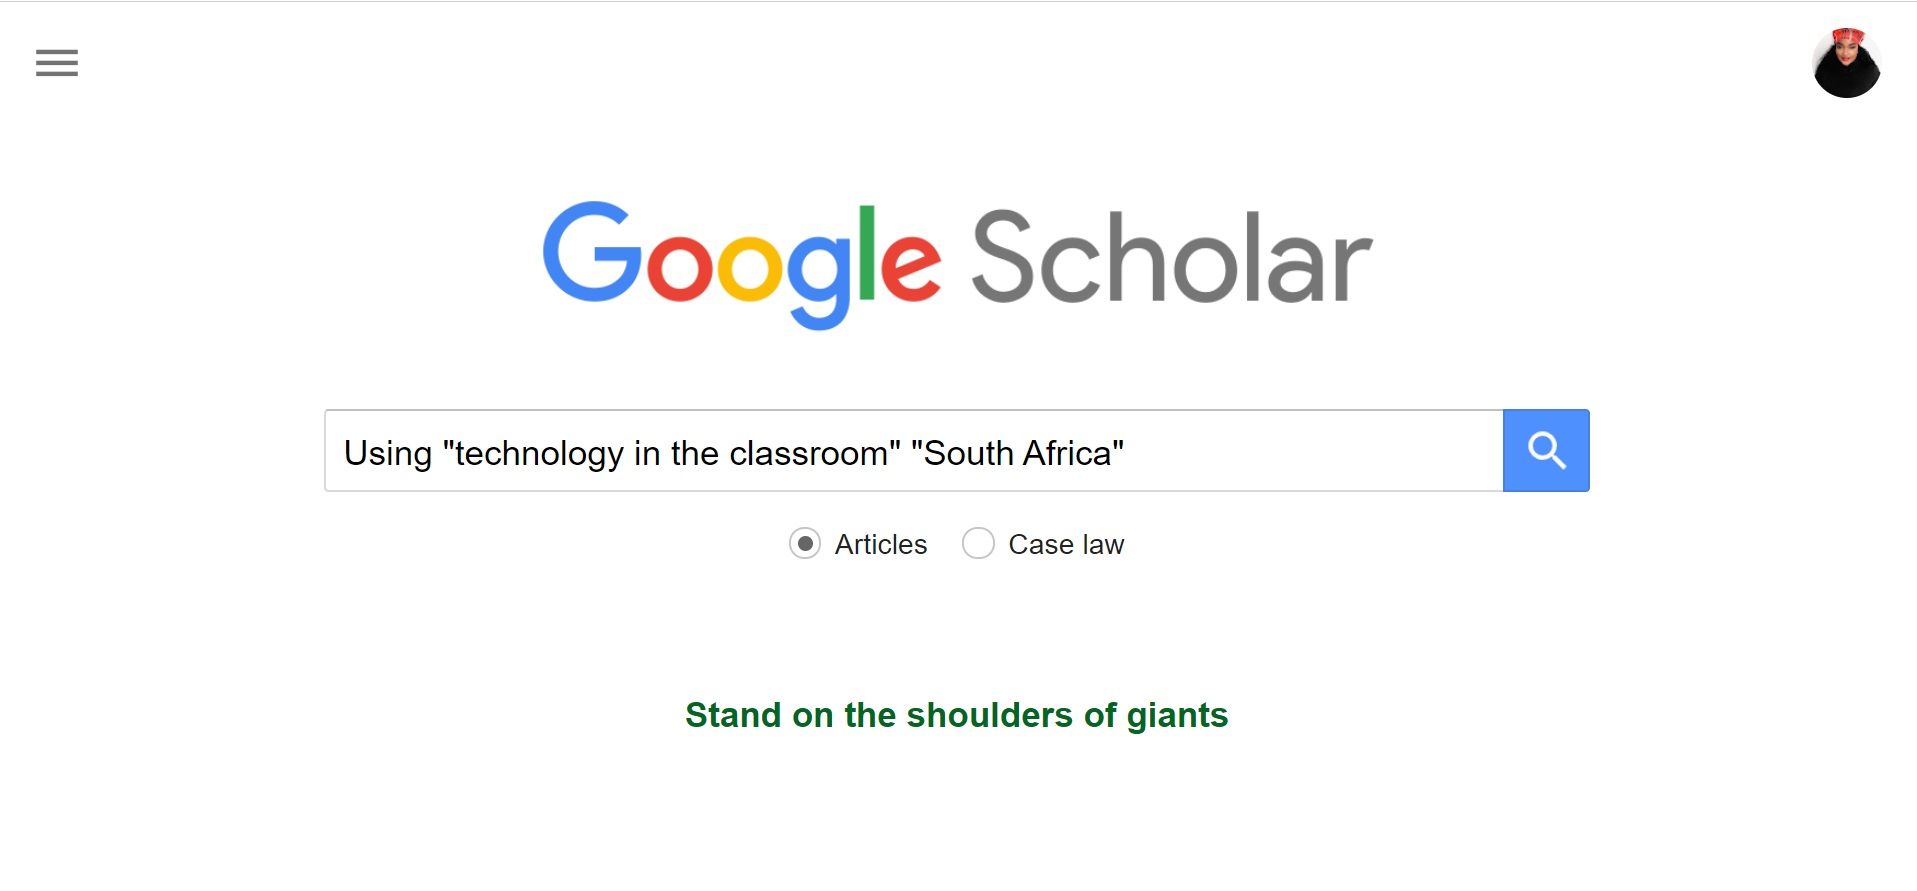 Keyword search on Google Scholar